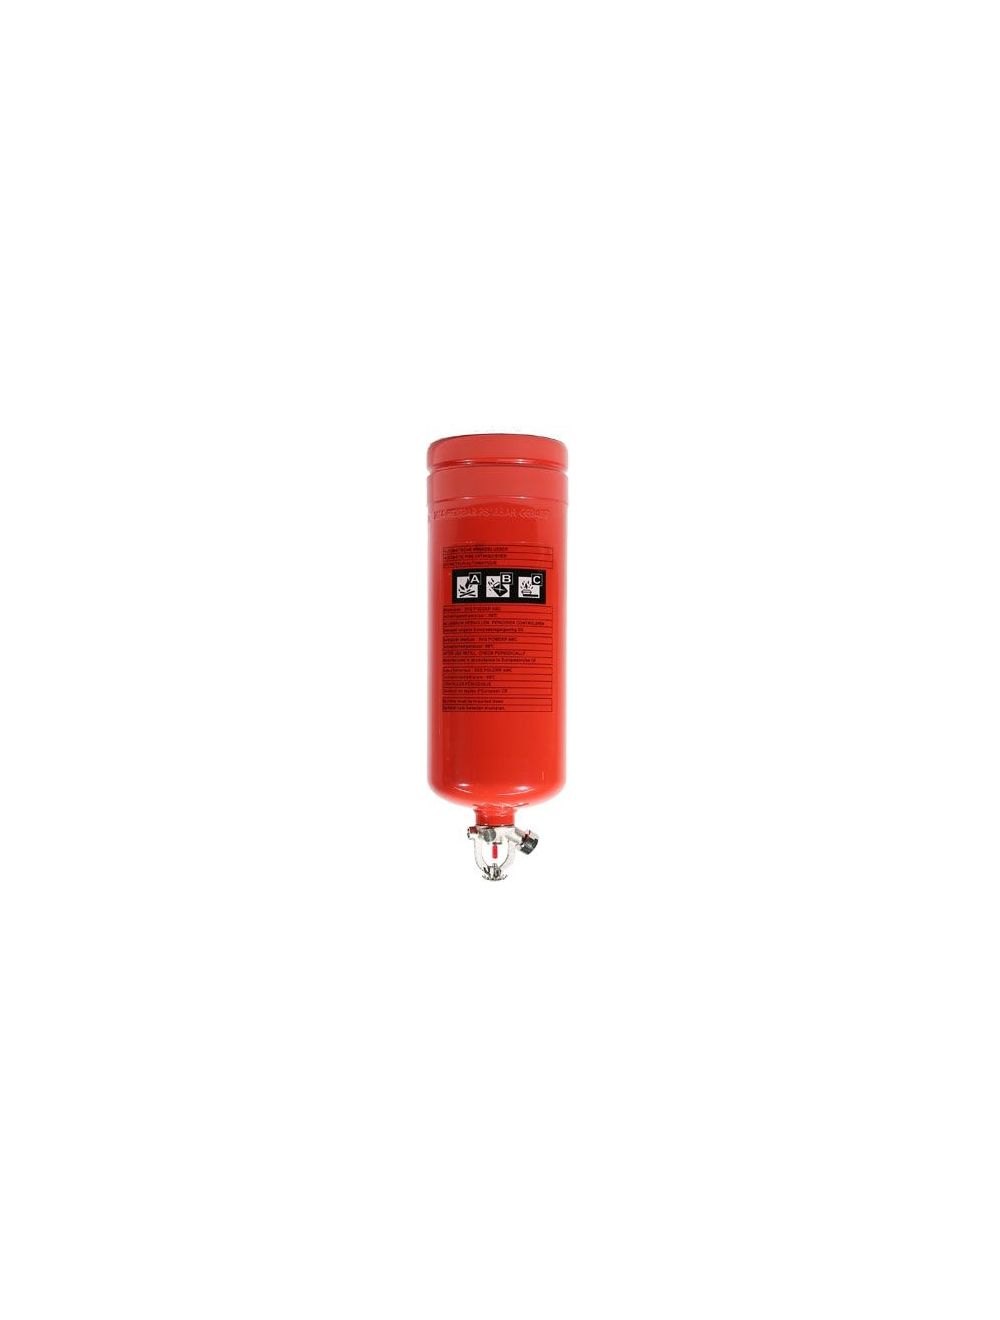 Netto orgaan binnenkomst Automatische brandblusser - poeder 3 kg | Brandblussershop |  Brandblussershop